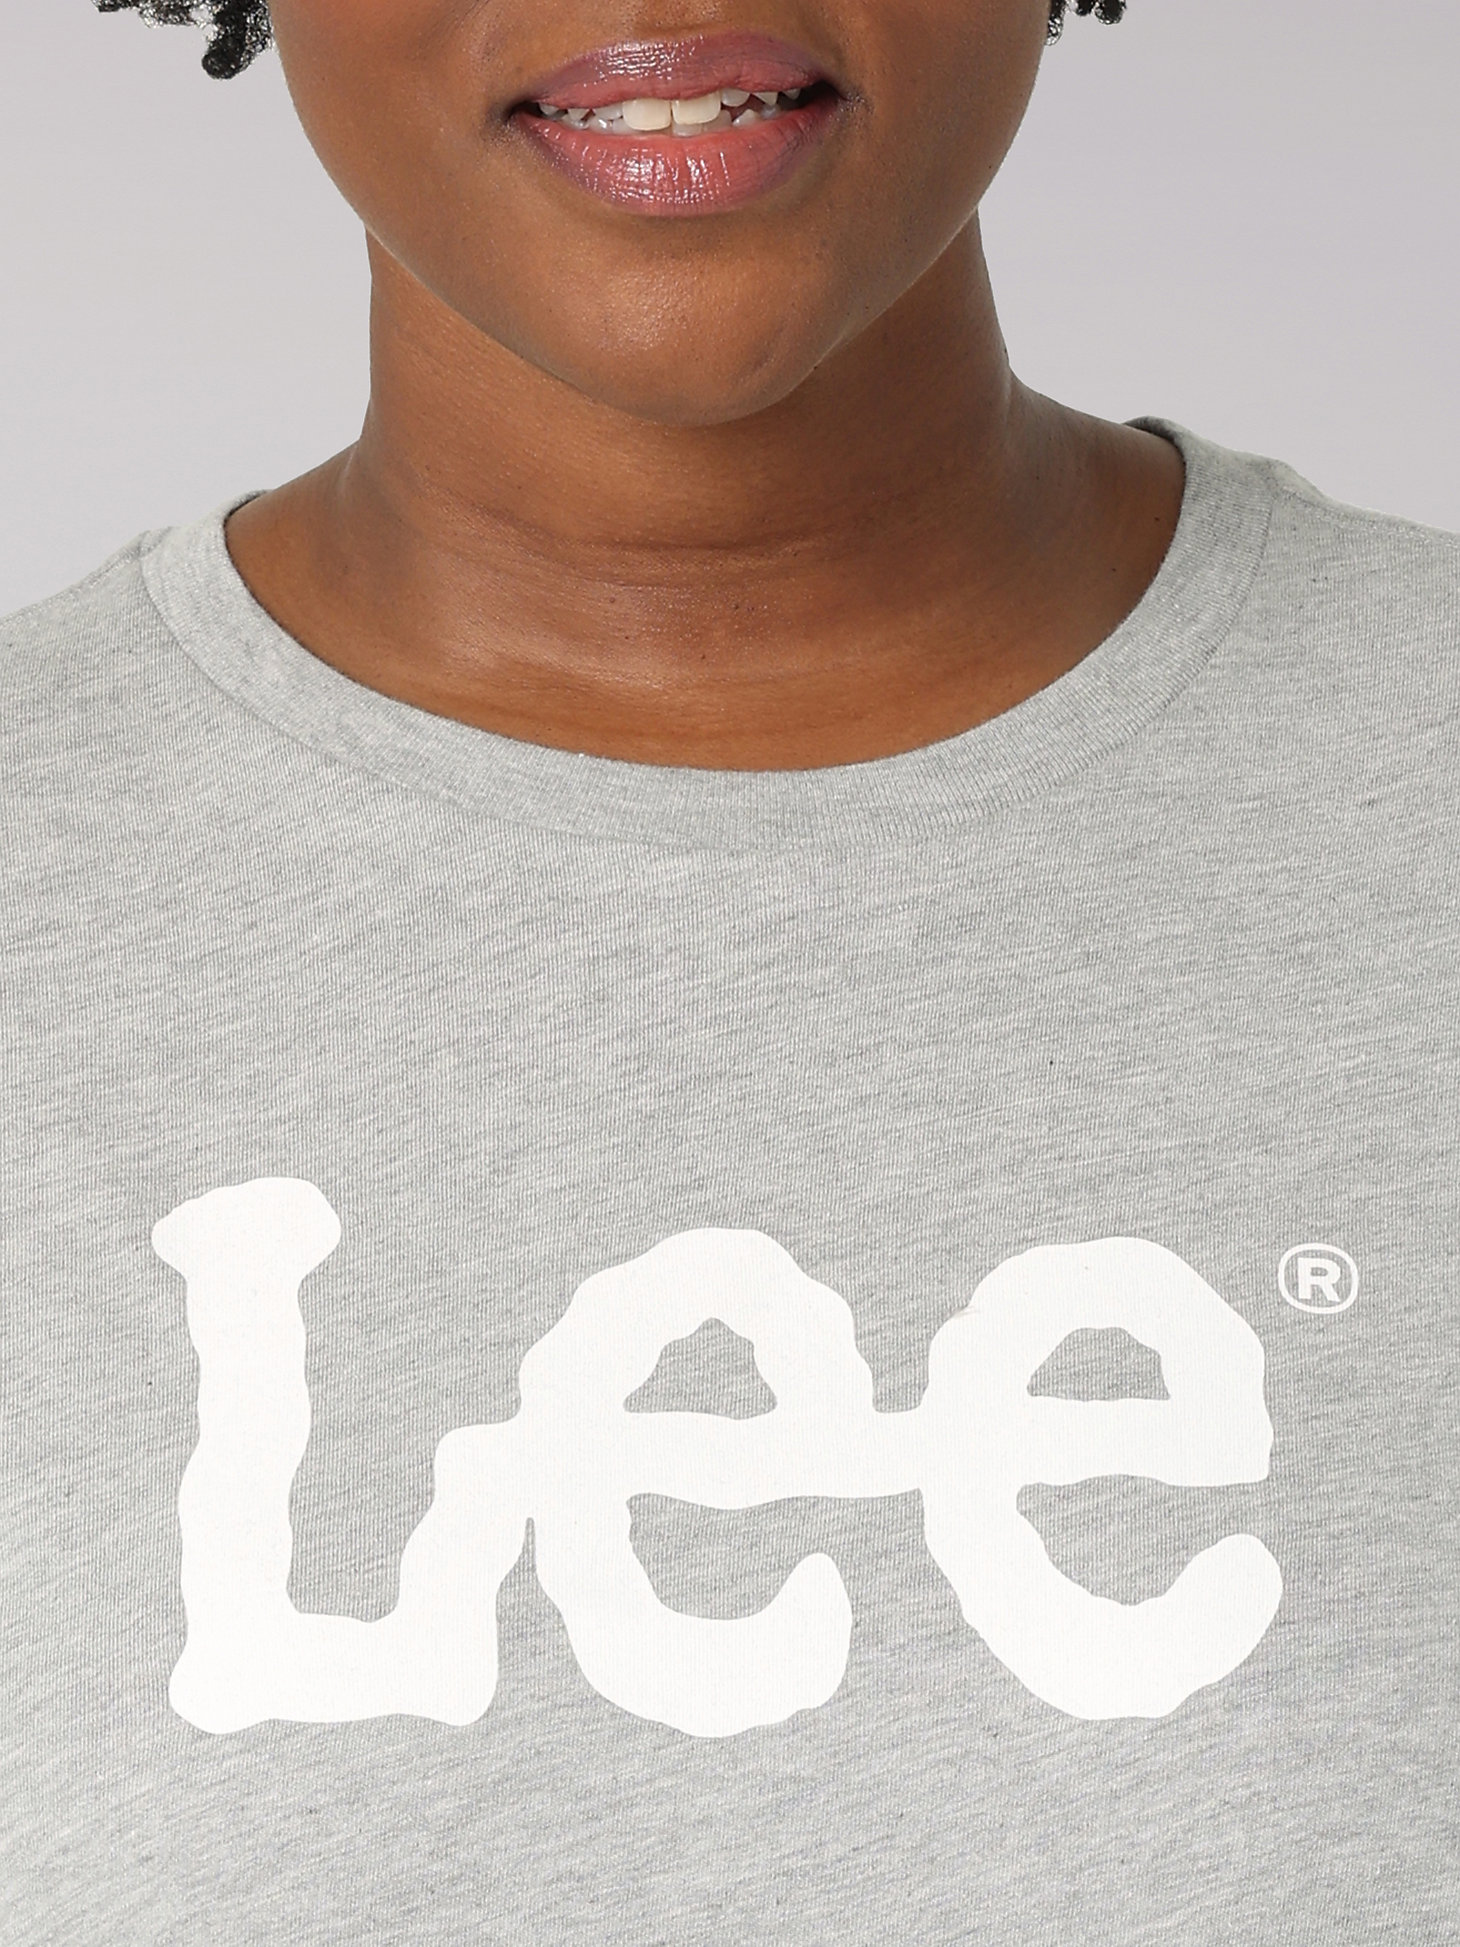 Women's Lee Logo Tee (Plus) in Light Grey Heather alternative view 2